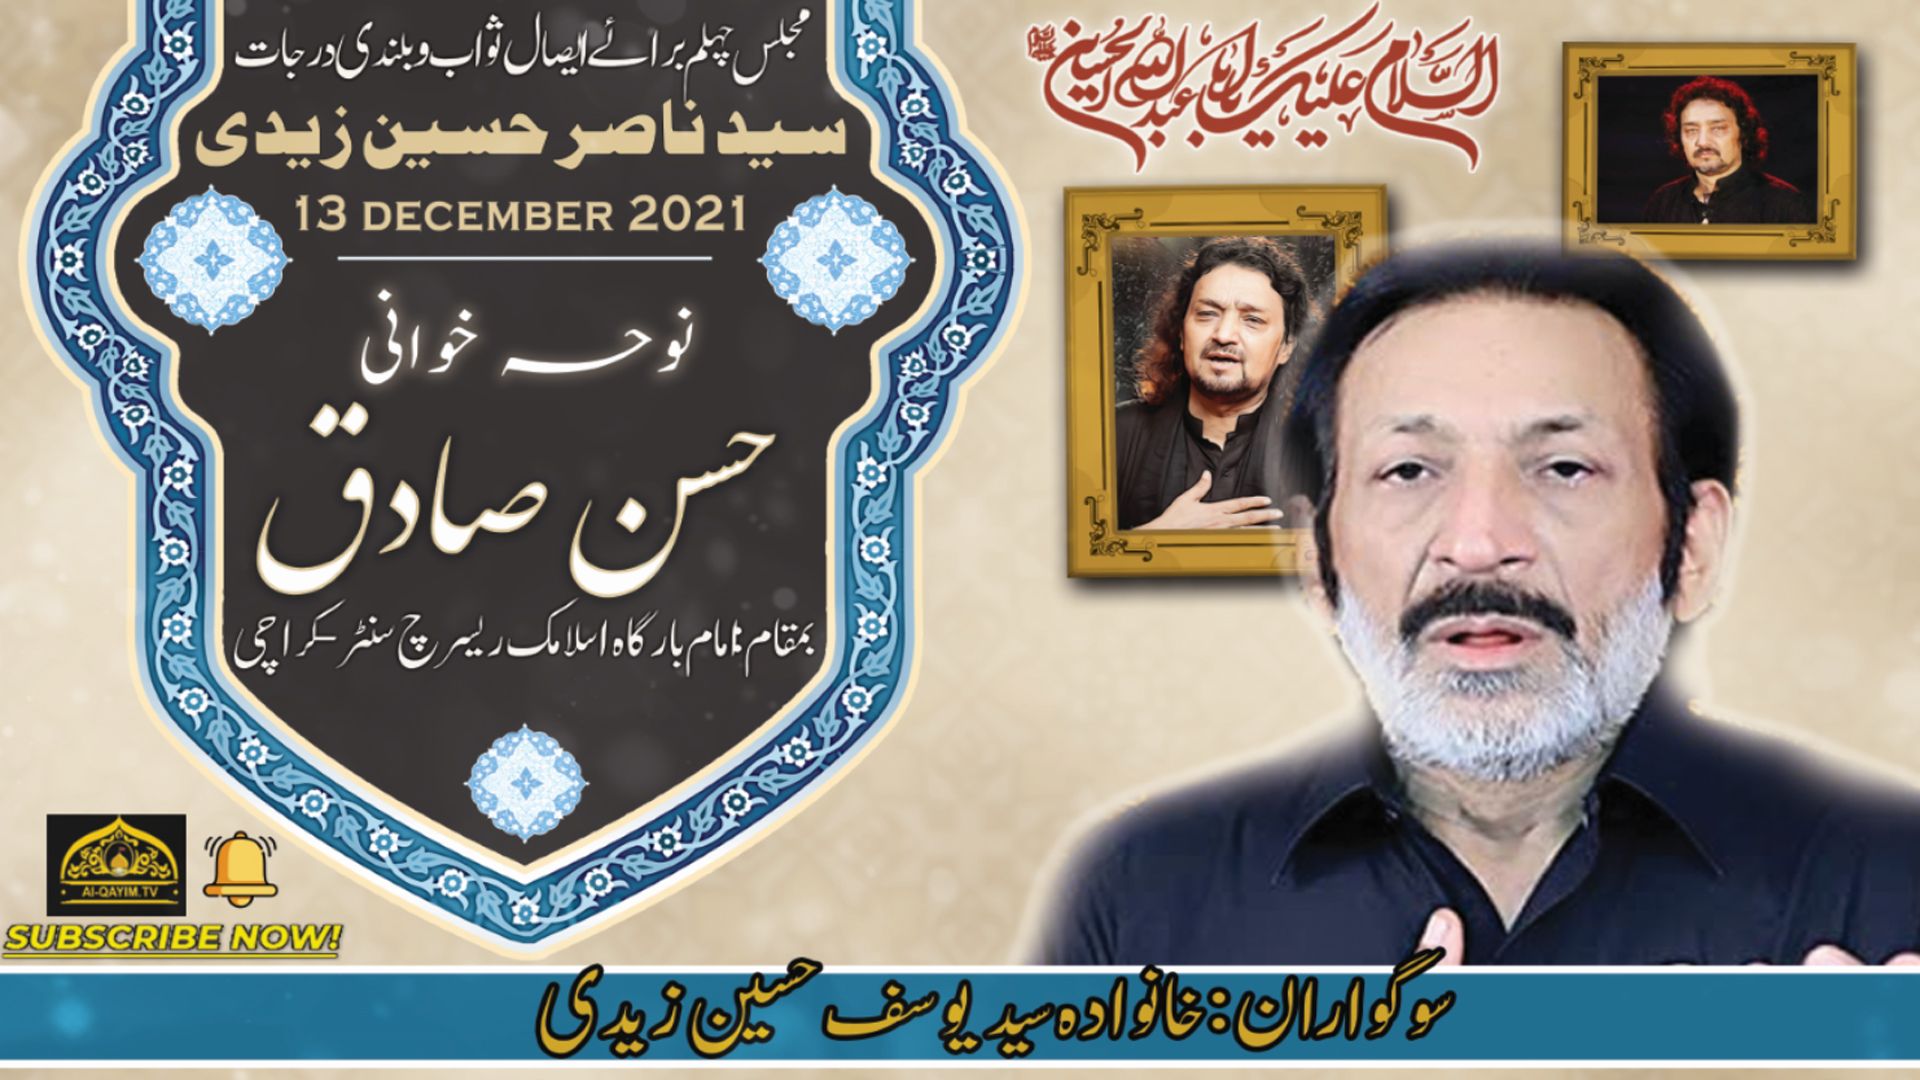 Noha | Hassan Sadiq | Majlis-e-Chelum Nasir Hussain Zaidi | 13 December 2021 | Karachi